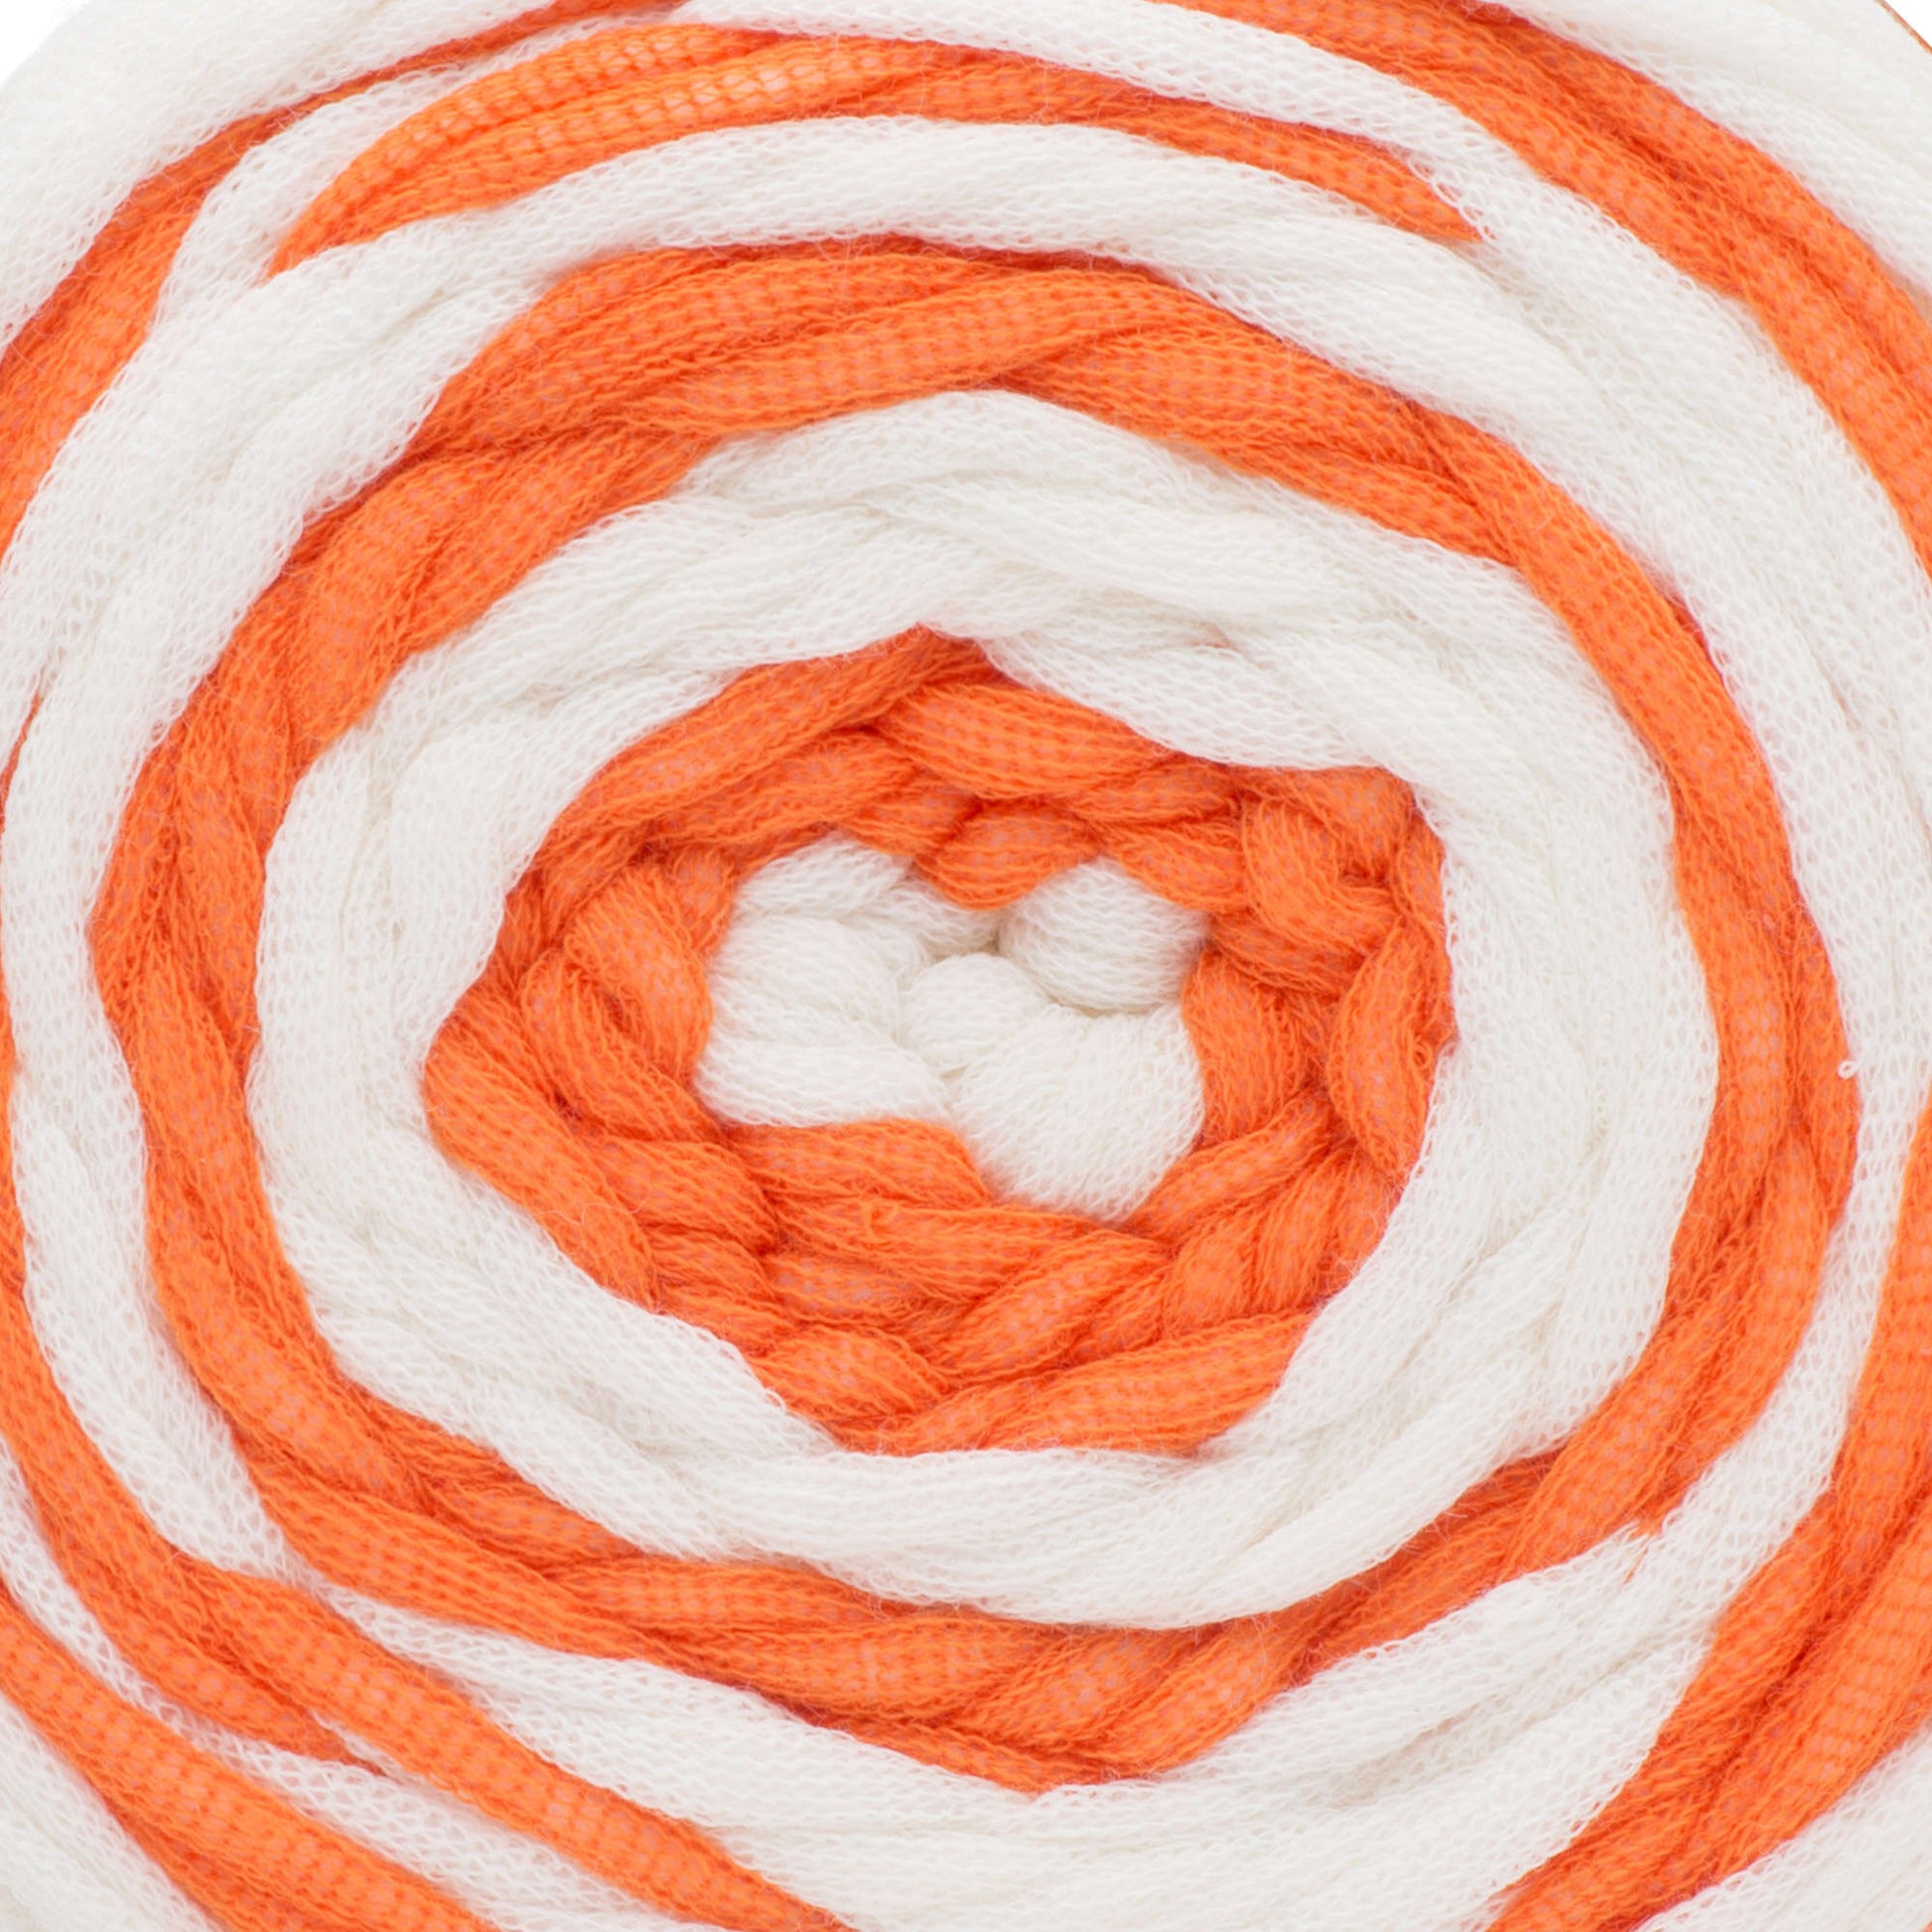 Bernat Maker Home Outdoor Stripes Yarn - Discontinued Fresh Orange Stripe